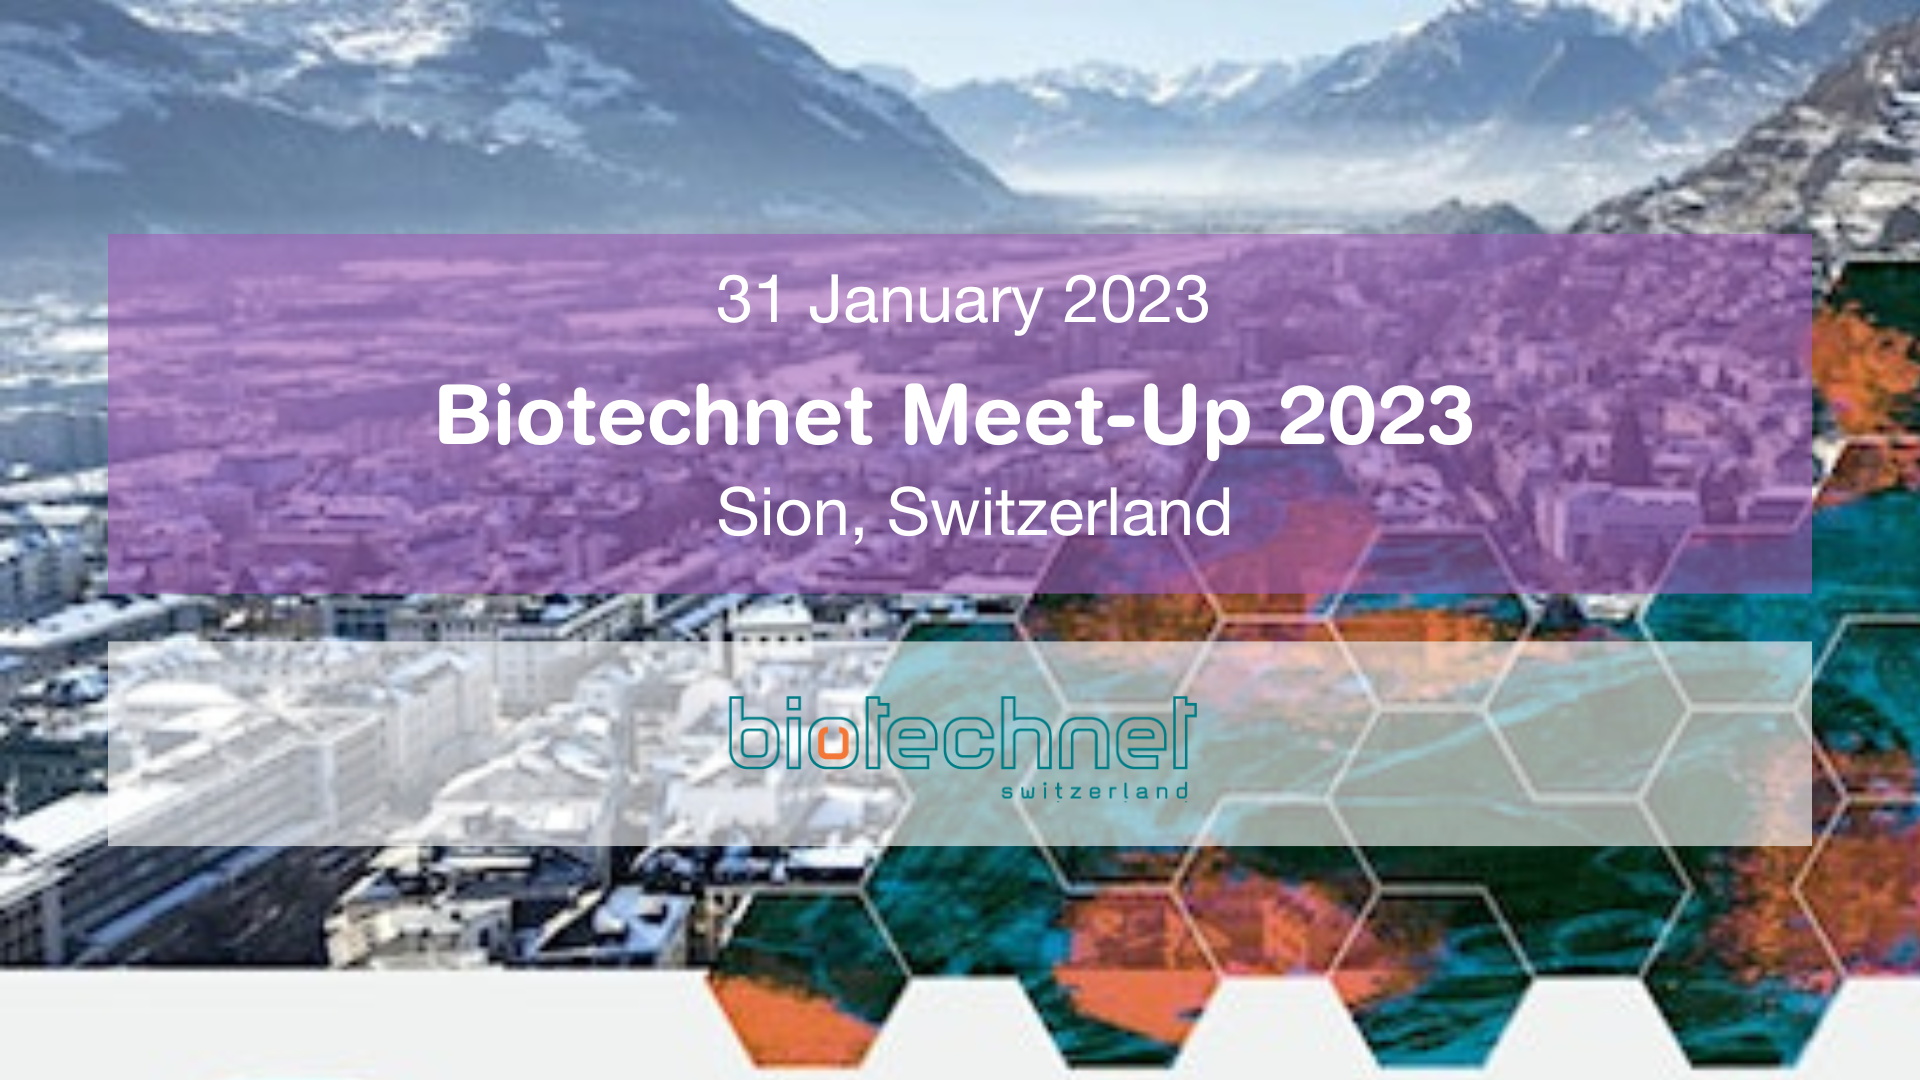 Let’s meet @Biotechnet Meet-Up 2023 Sion !